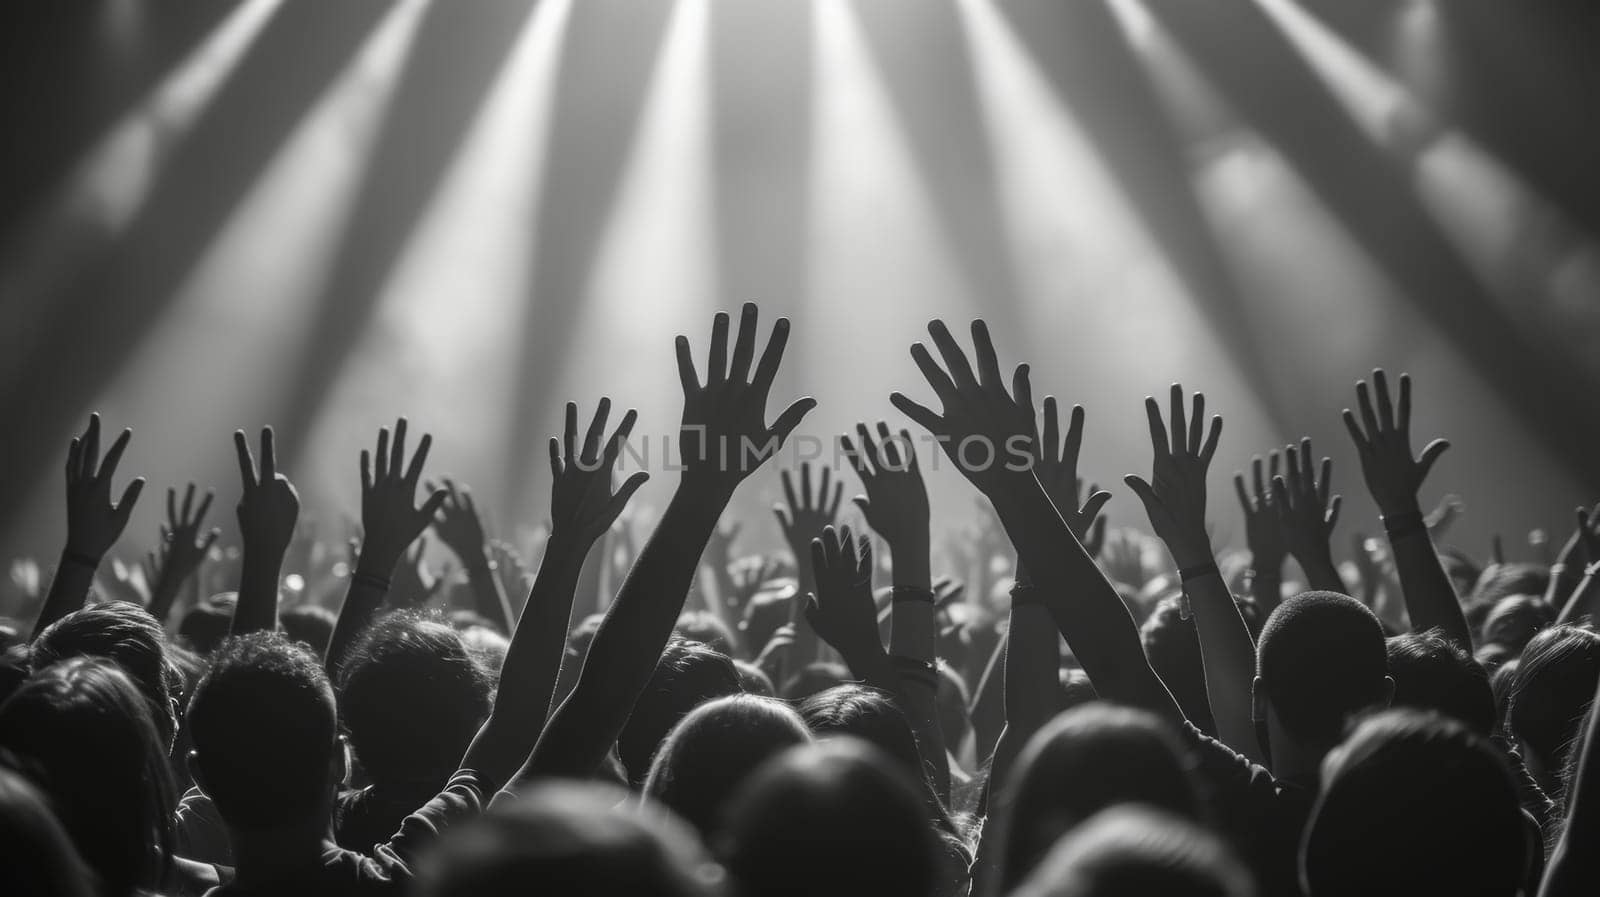 During a music festival, an audience raises their hands